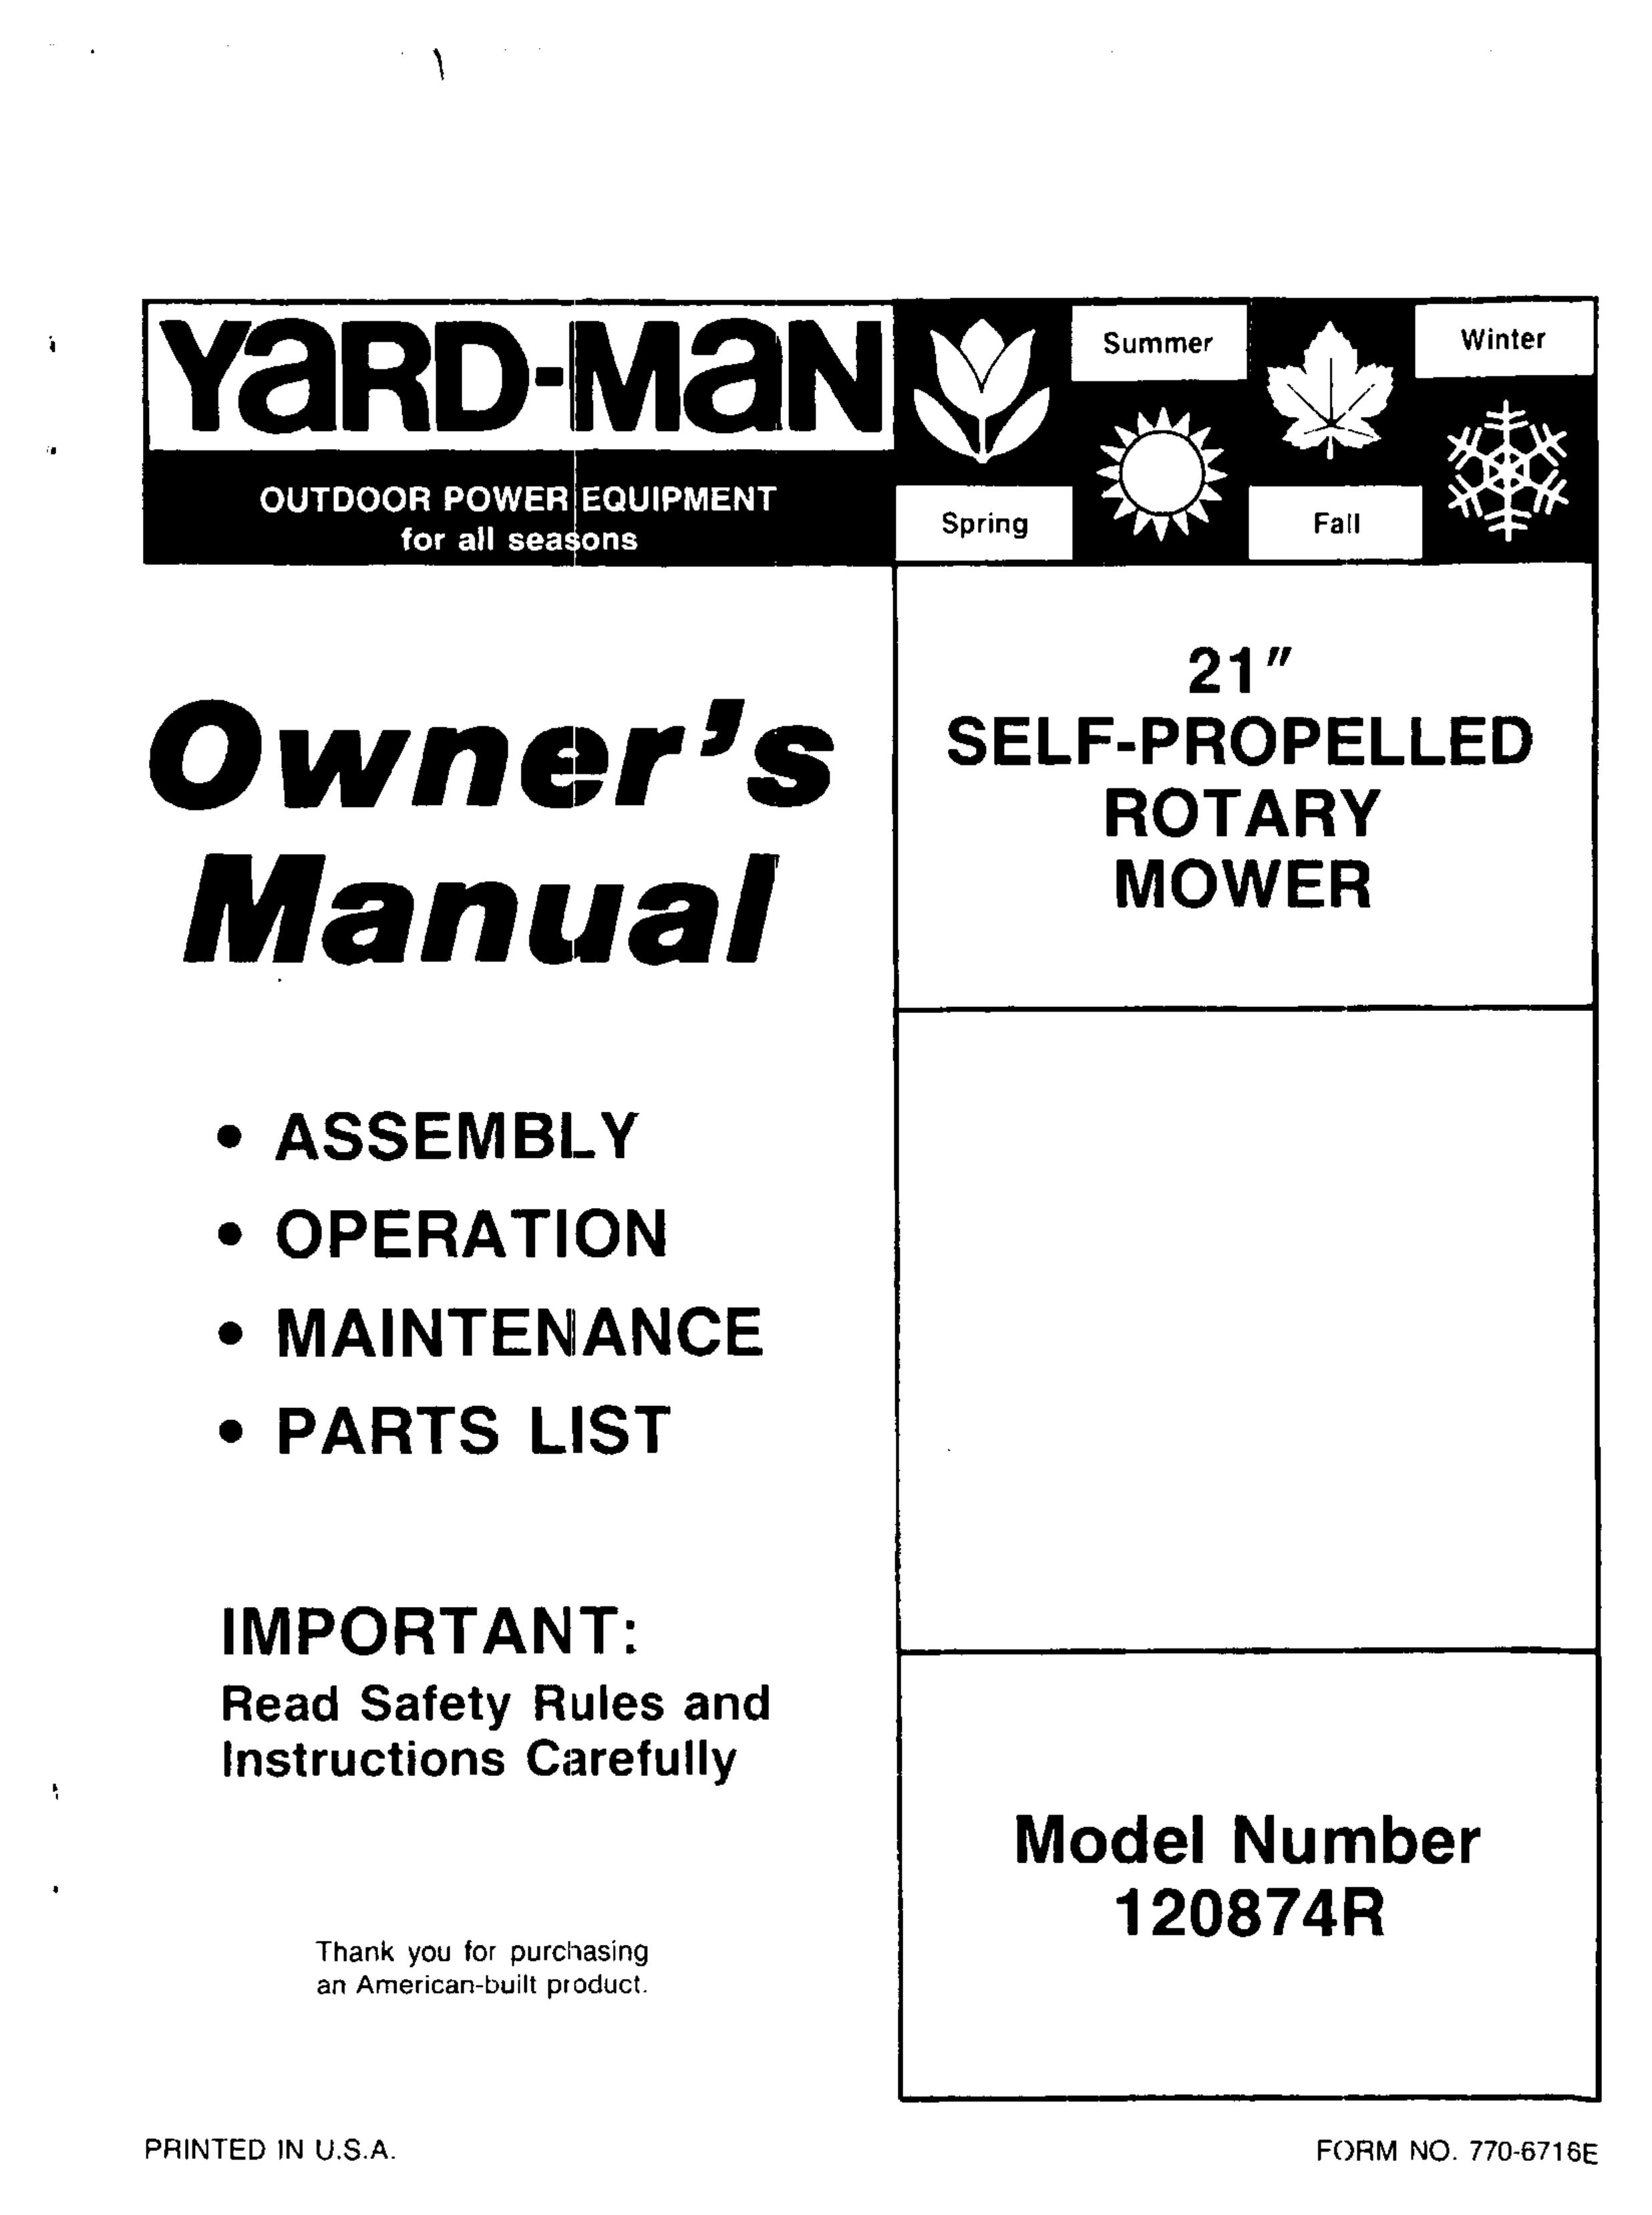 Yard-Man 120874R Lawn Mower User Manual